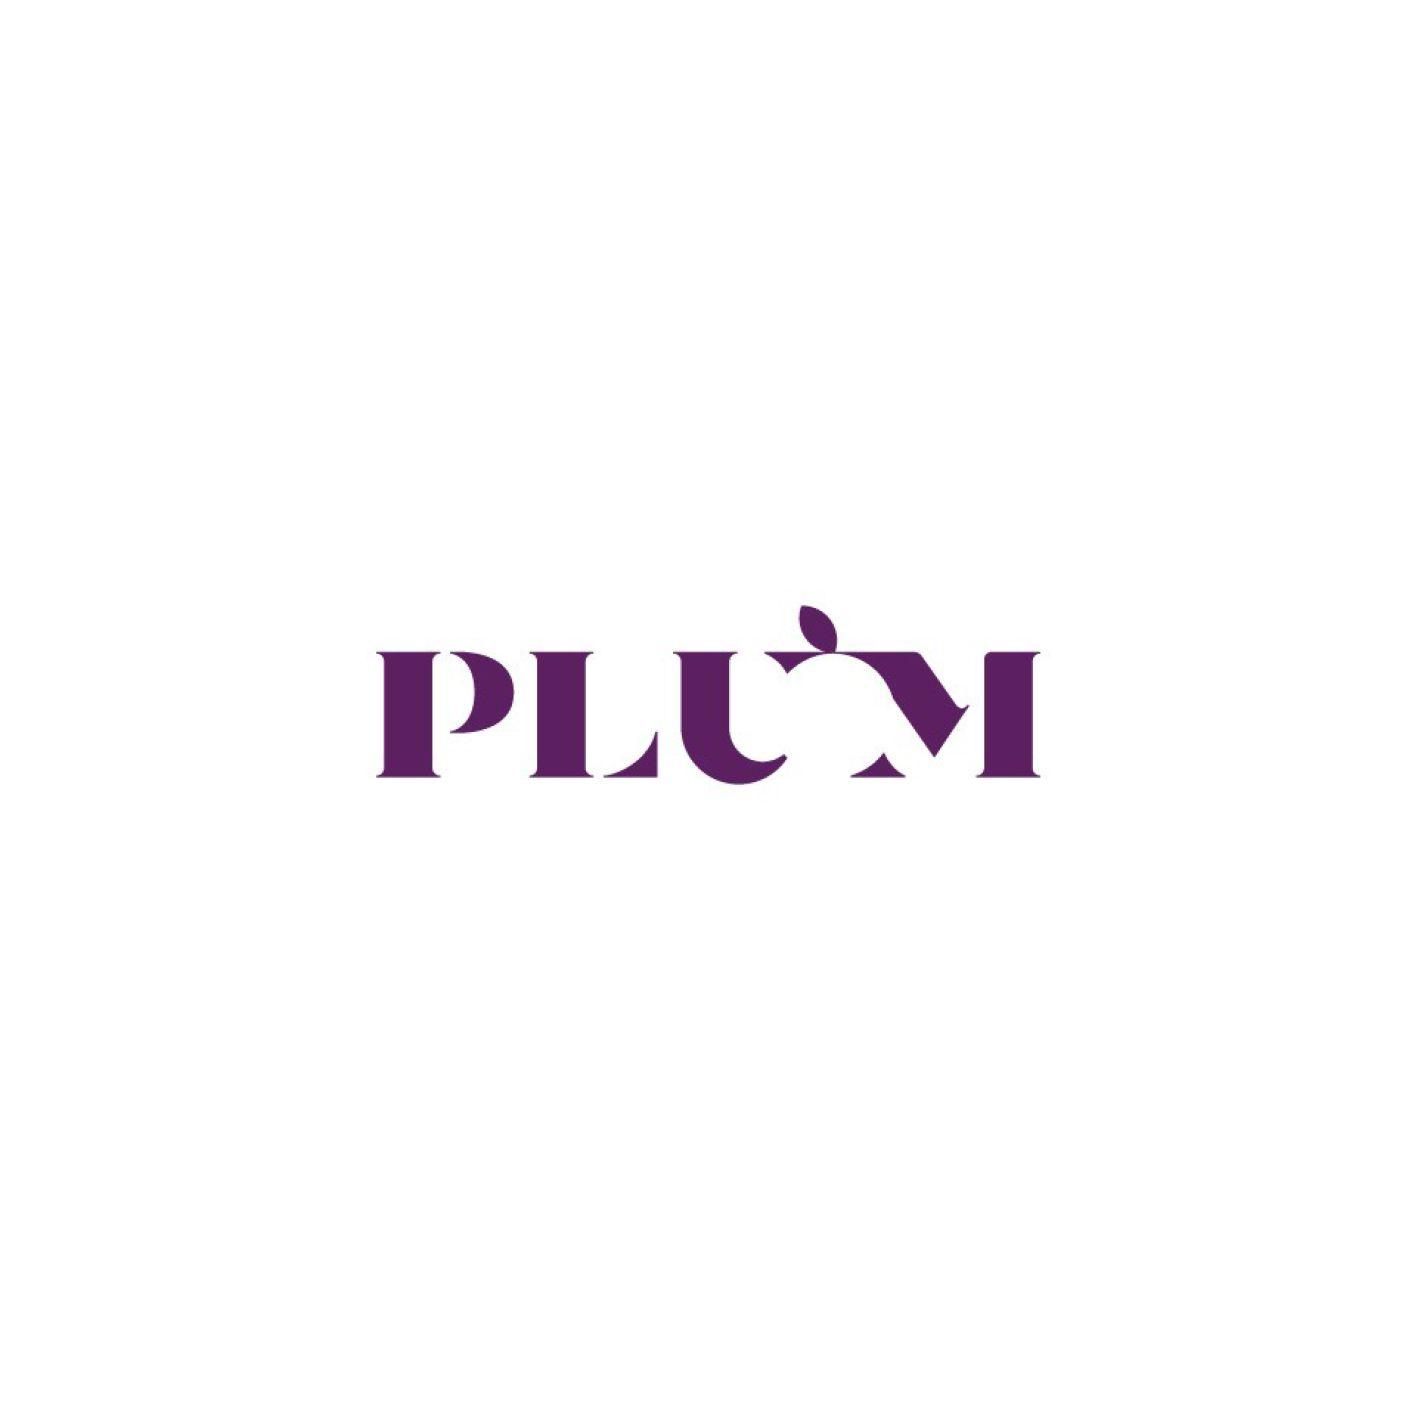 Plum Logo - Plum logo